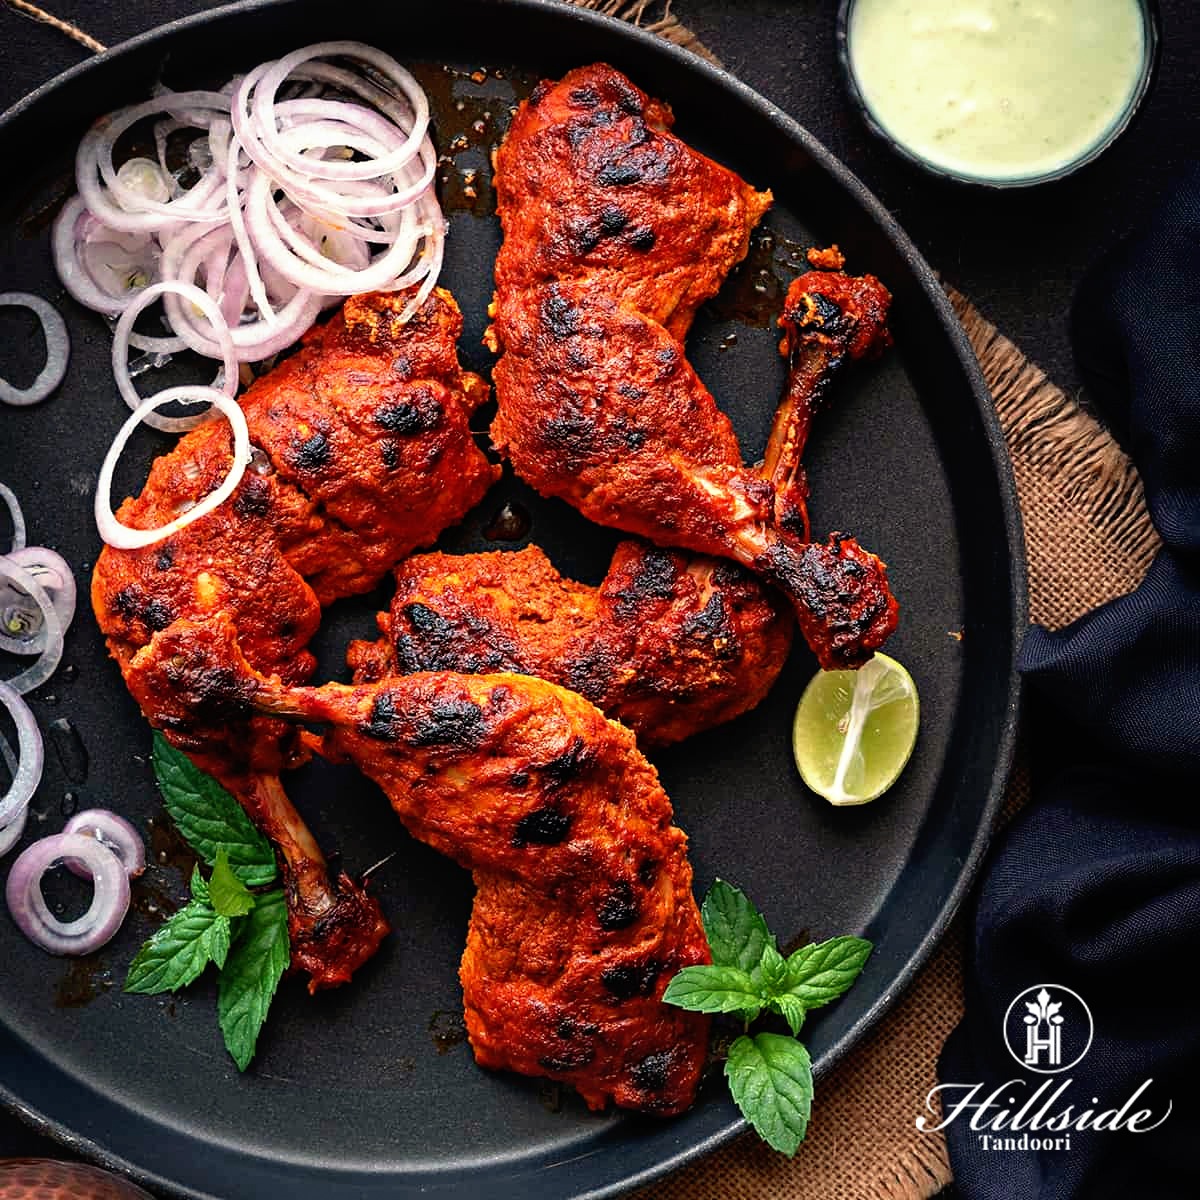 Get the Flame-Kissed Flavor of Tandoori Chicken at your home! 🍴😋

✅ 𝐄𝐧𝐣𝐨𝐲 𝐚 𝟏𝟎% 𝐃𝐢𝐬𝐜𝐨𝐮𝐧𝐭 𝐨𝐧 𝐎𝐧𝐥𝐢𝐧𝐞 𝐎𝐫𝐝𝐞𝐫𝐬
🏨128 Church Hill IG10 1LH
📞 020 8508 5287

#Hillsidetandoori #ChurchHillLoughton #est_1990 #takeaway #indian #besttakeaway #chicken